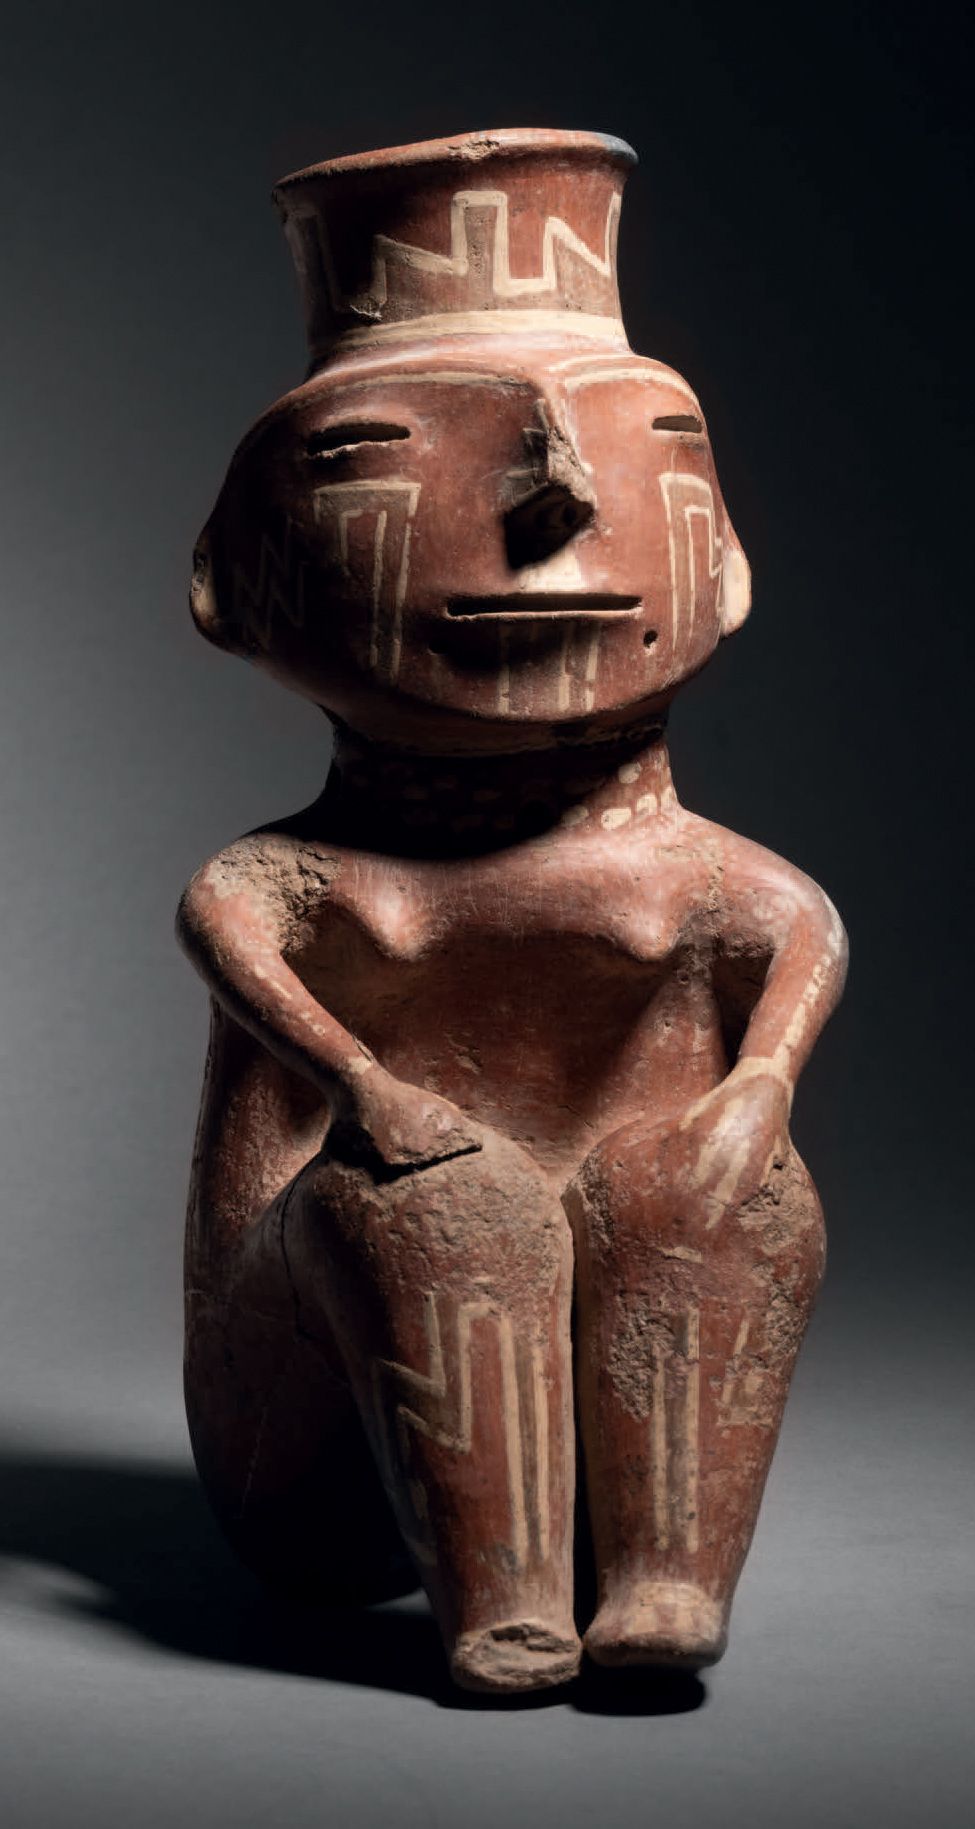 Null 坐着的人物，Condorhuasi文化，阿根廷公元前500年-公元500年
空心陶瓷，砖红色滑面，装饰性奶油和深棕色油漆
高22厘米
Condorhu&hellip;